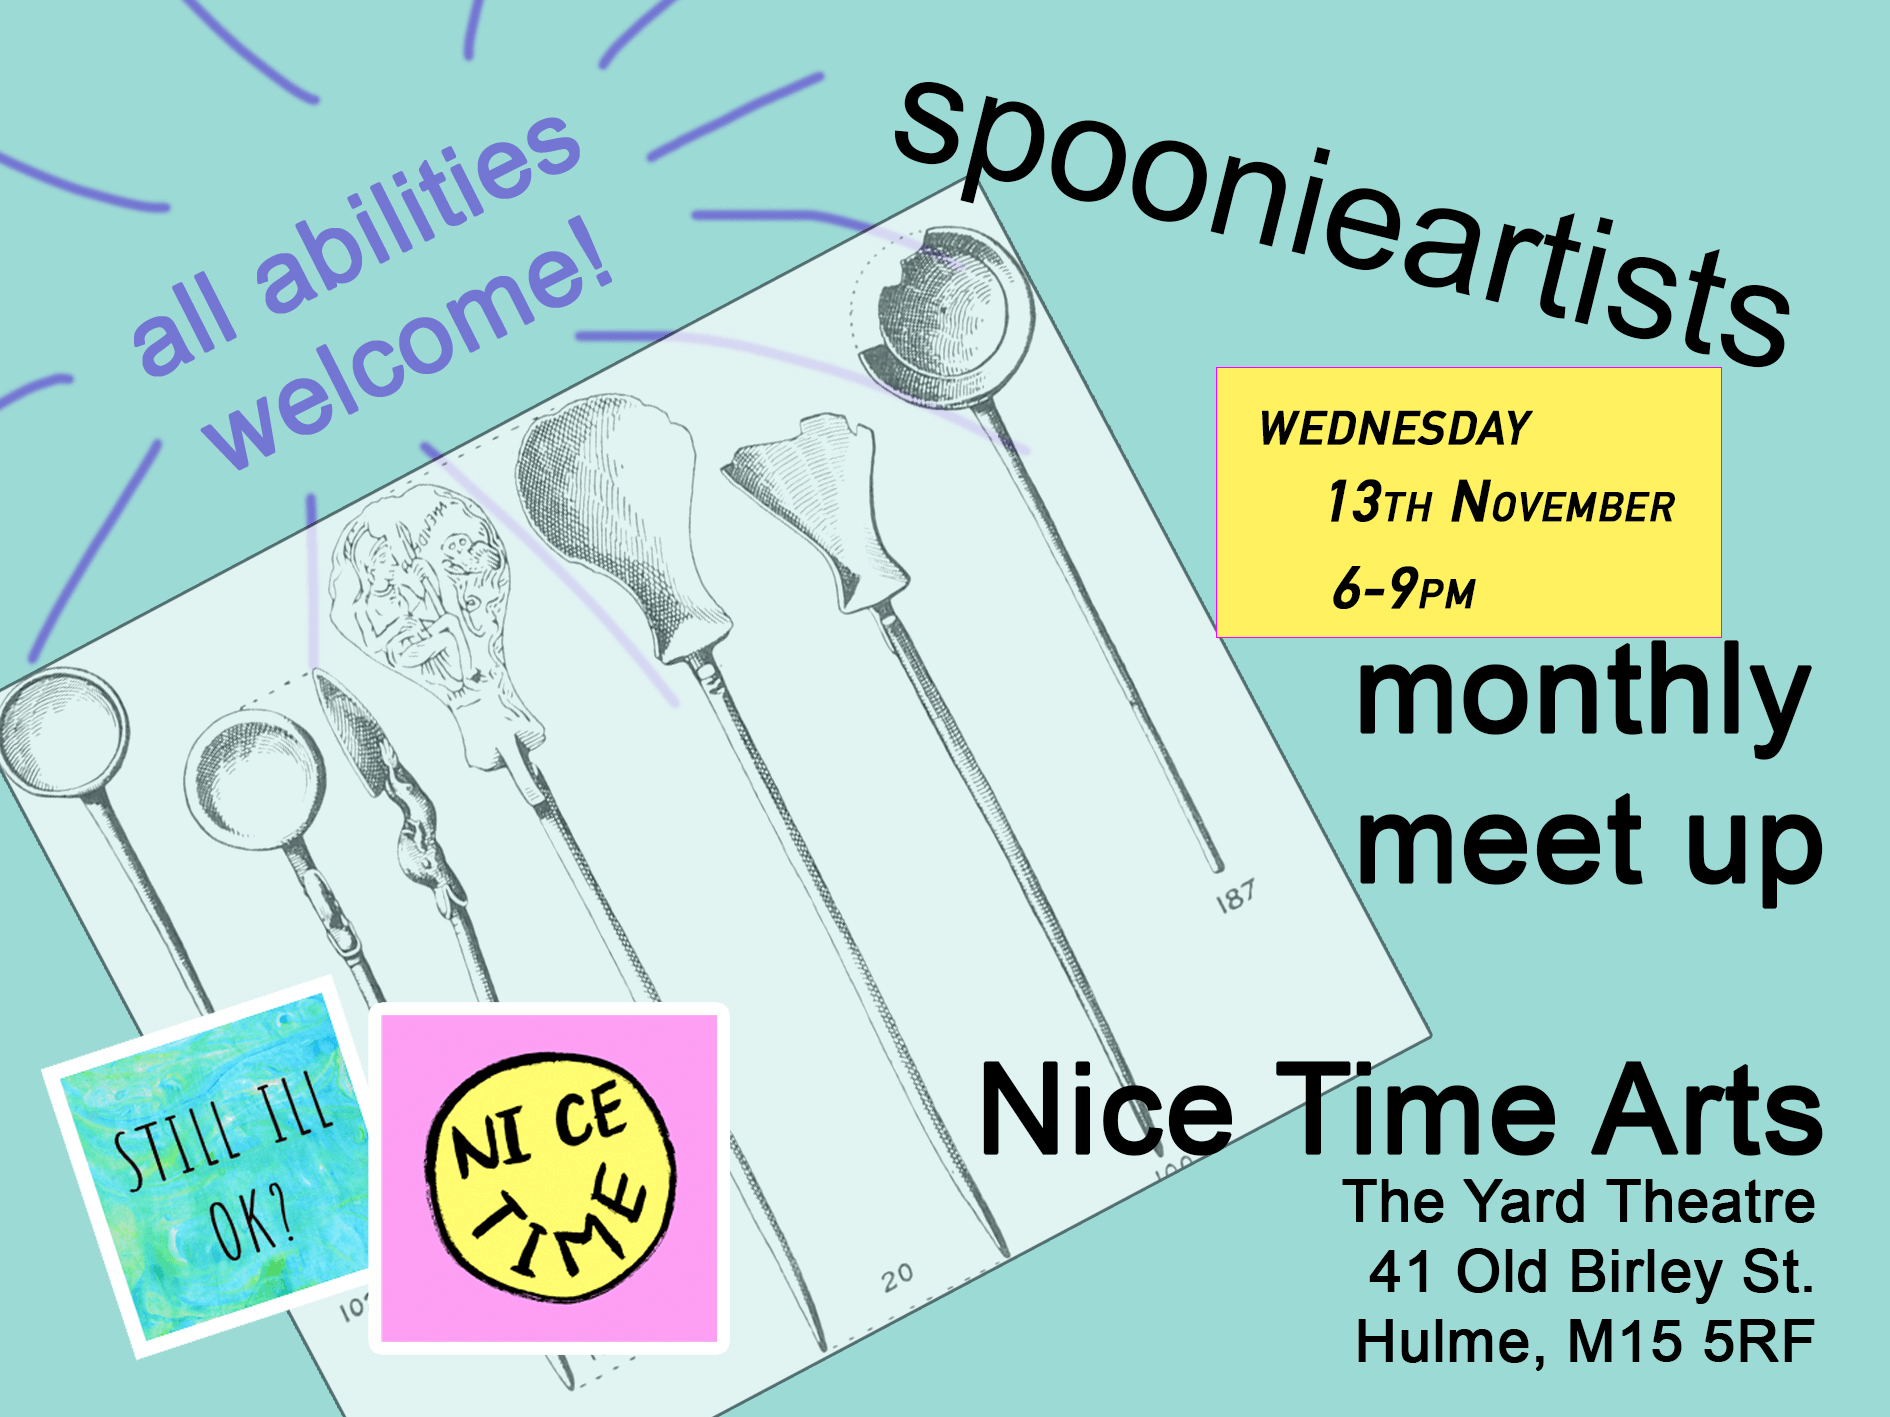 Wednesday heralds spoonie artist meet-up #2!